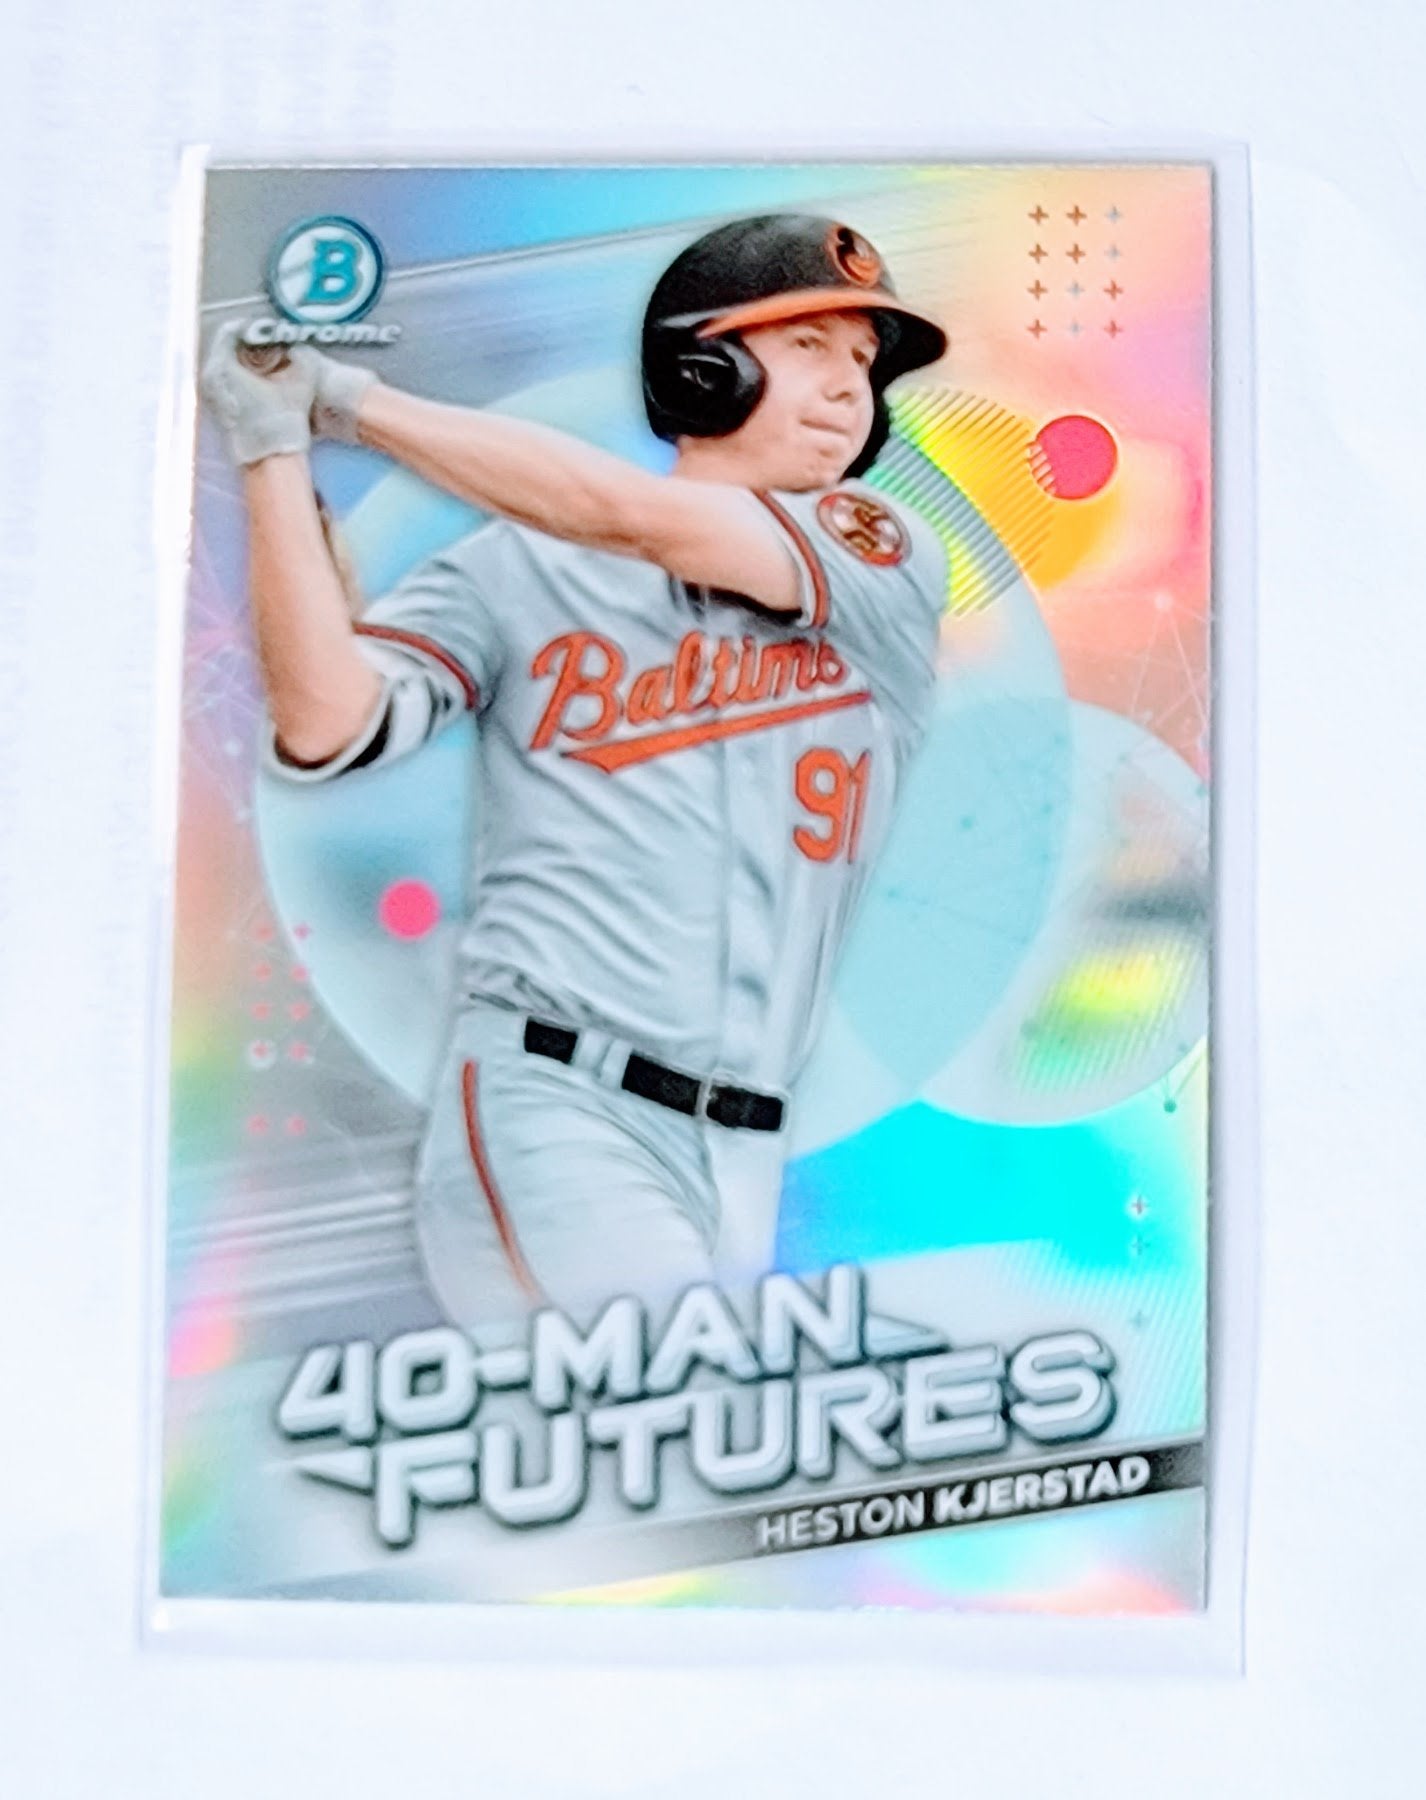 2021 Bowman Chrome Heston Kjerstad 40 Man Futures Refractor Baseball Trading Card SMCB1 simple Xclusive Collectibles   